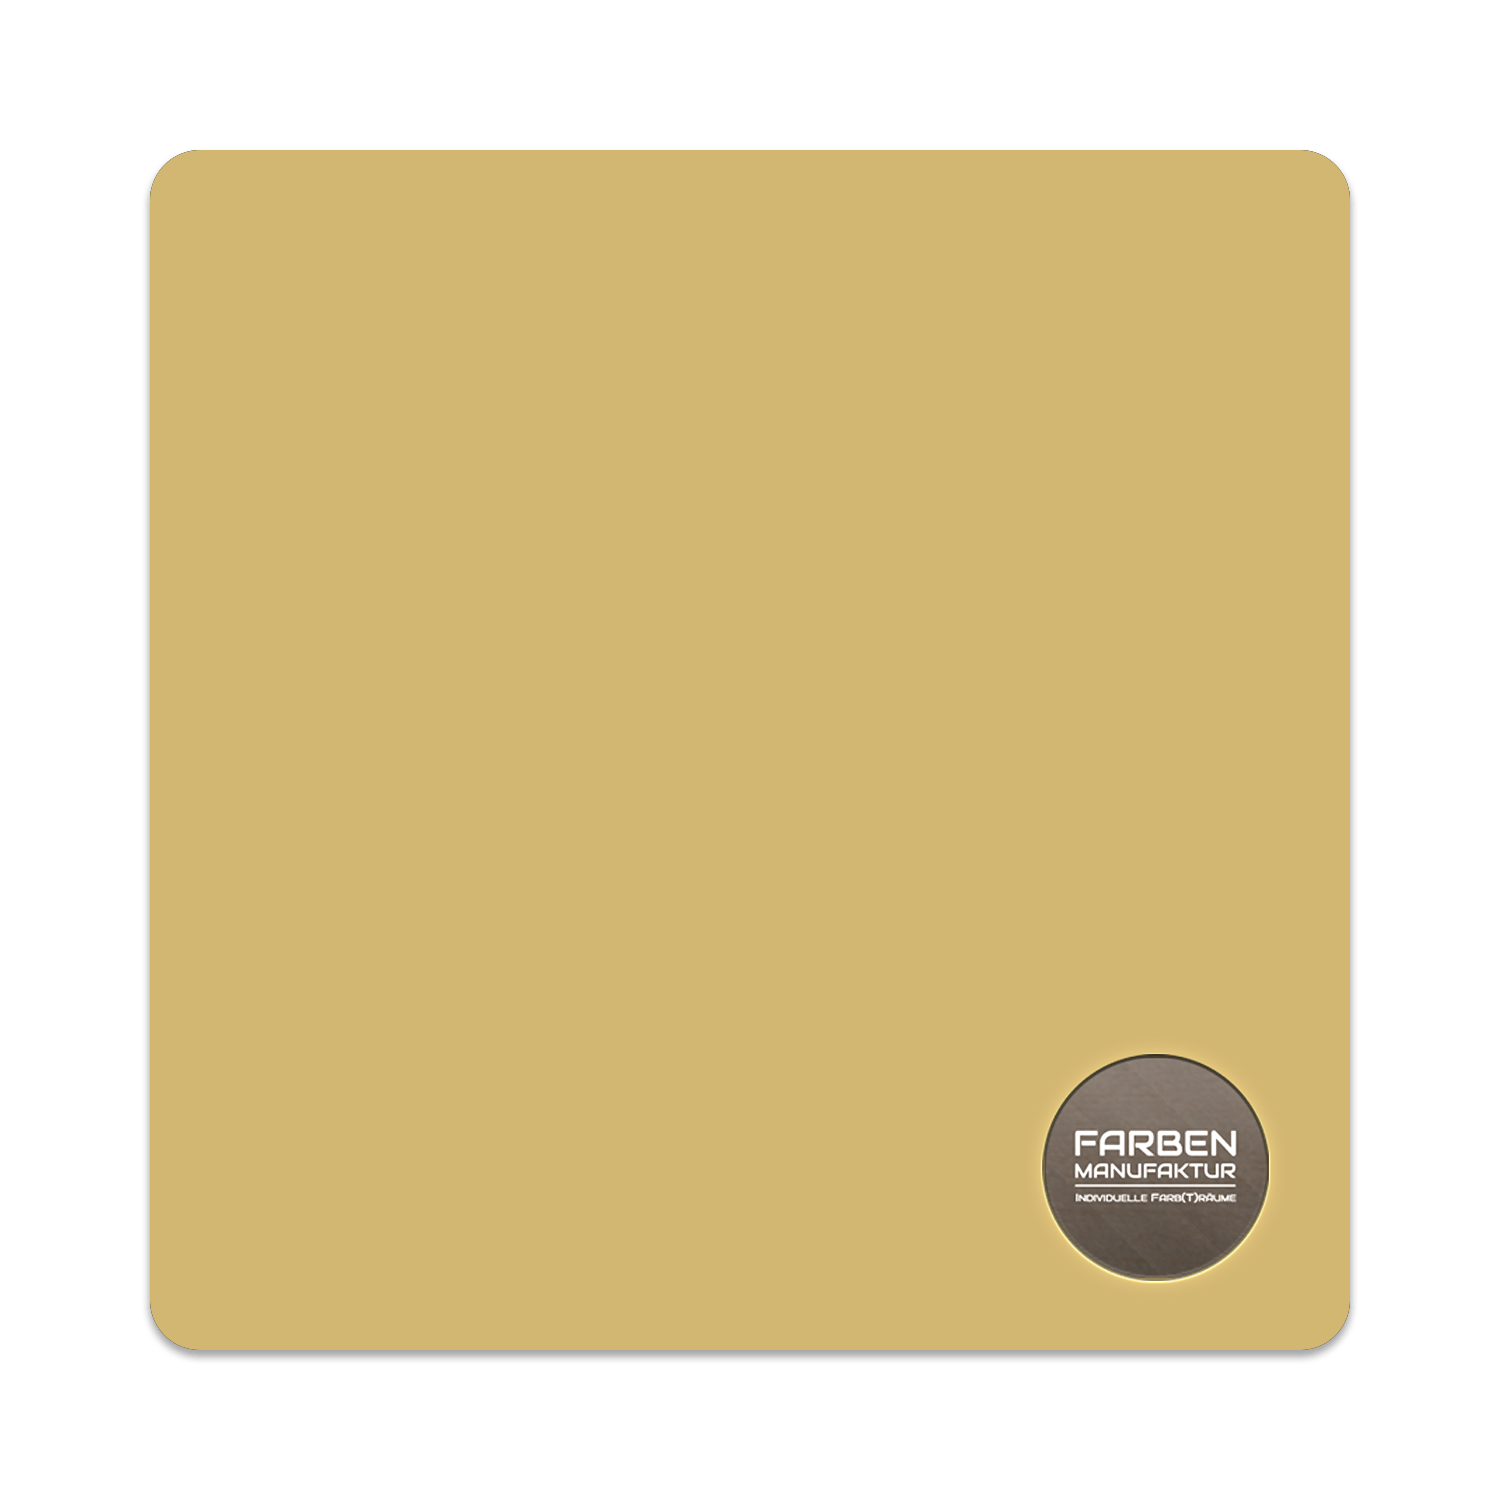 Farben Manufaktur Manufaktur Gold Bunttöne - RAL 1002 Sandgelb